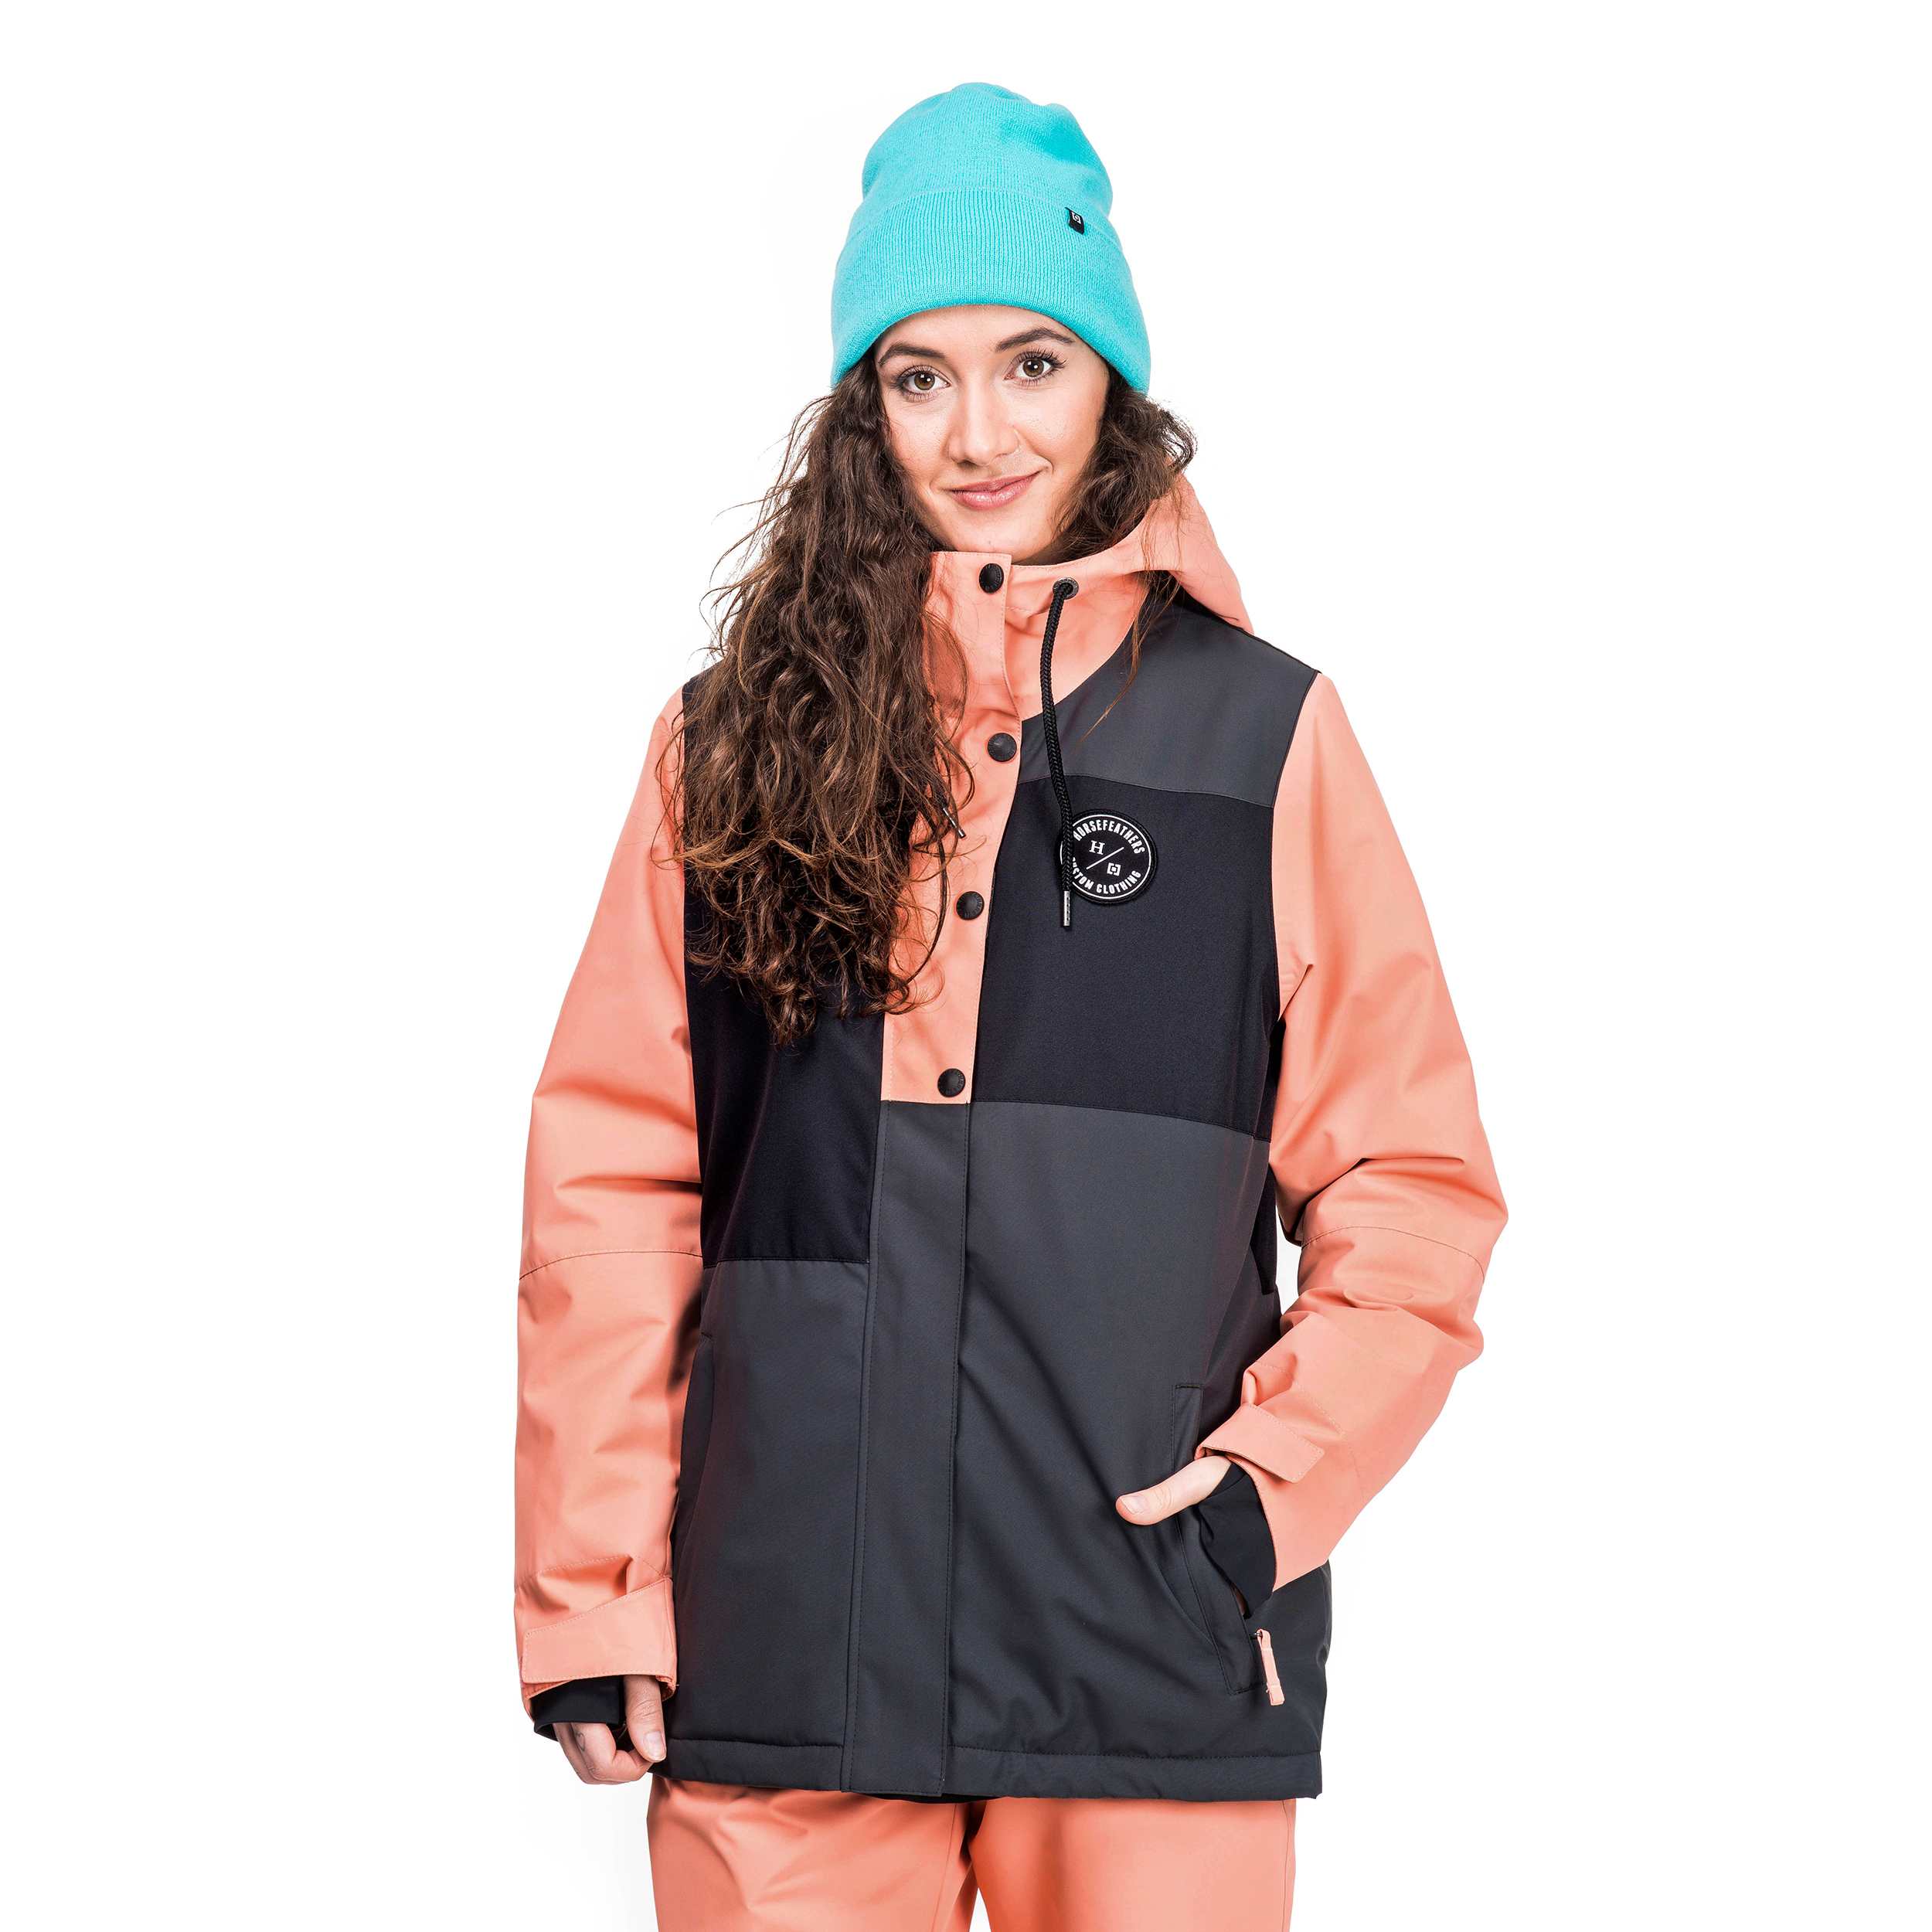 Women’s winter ski/snowboard jacket